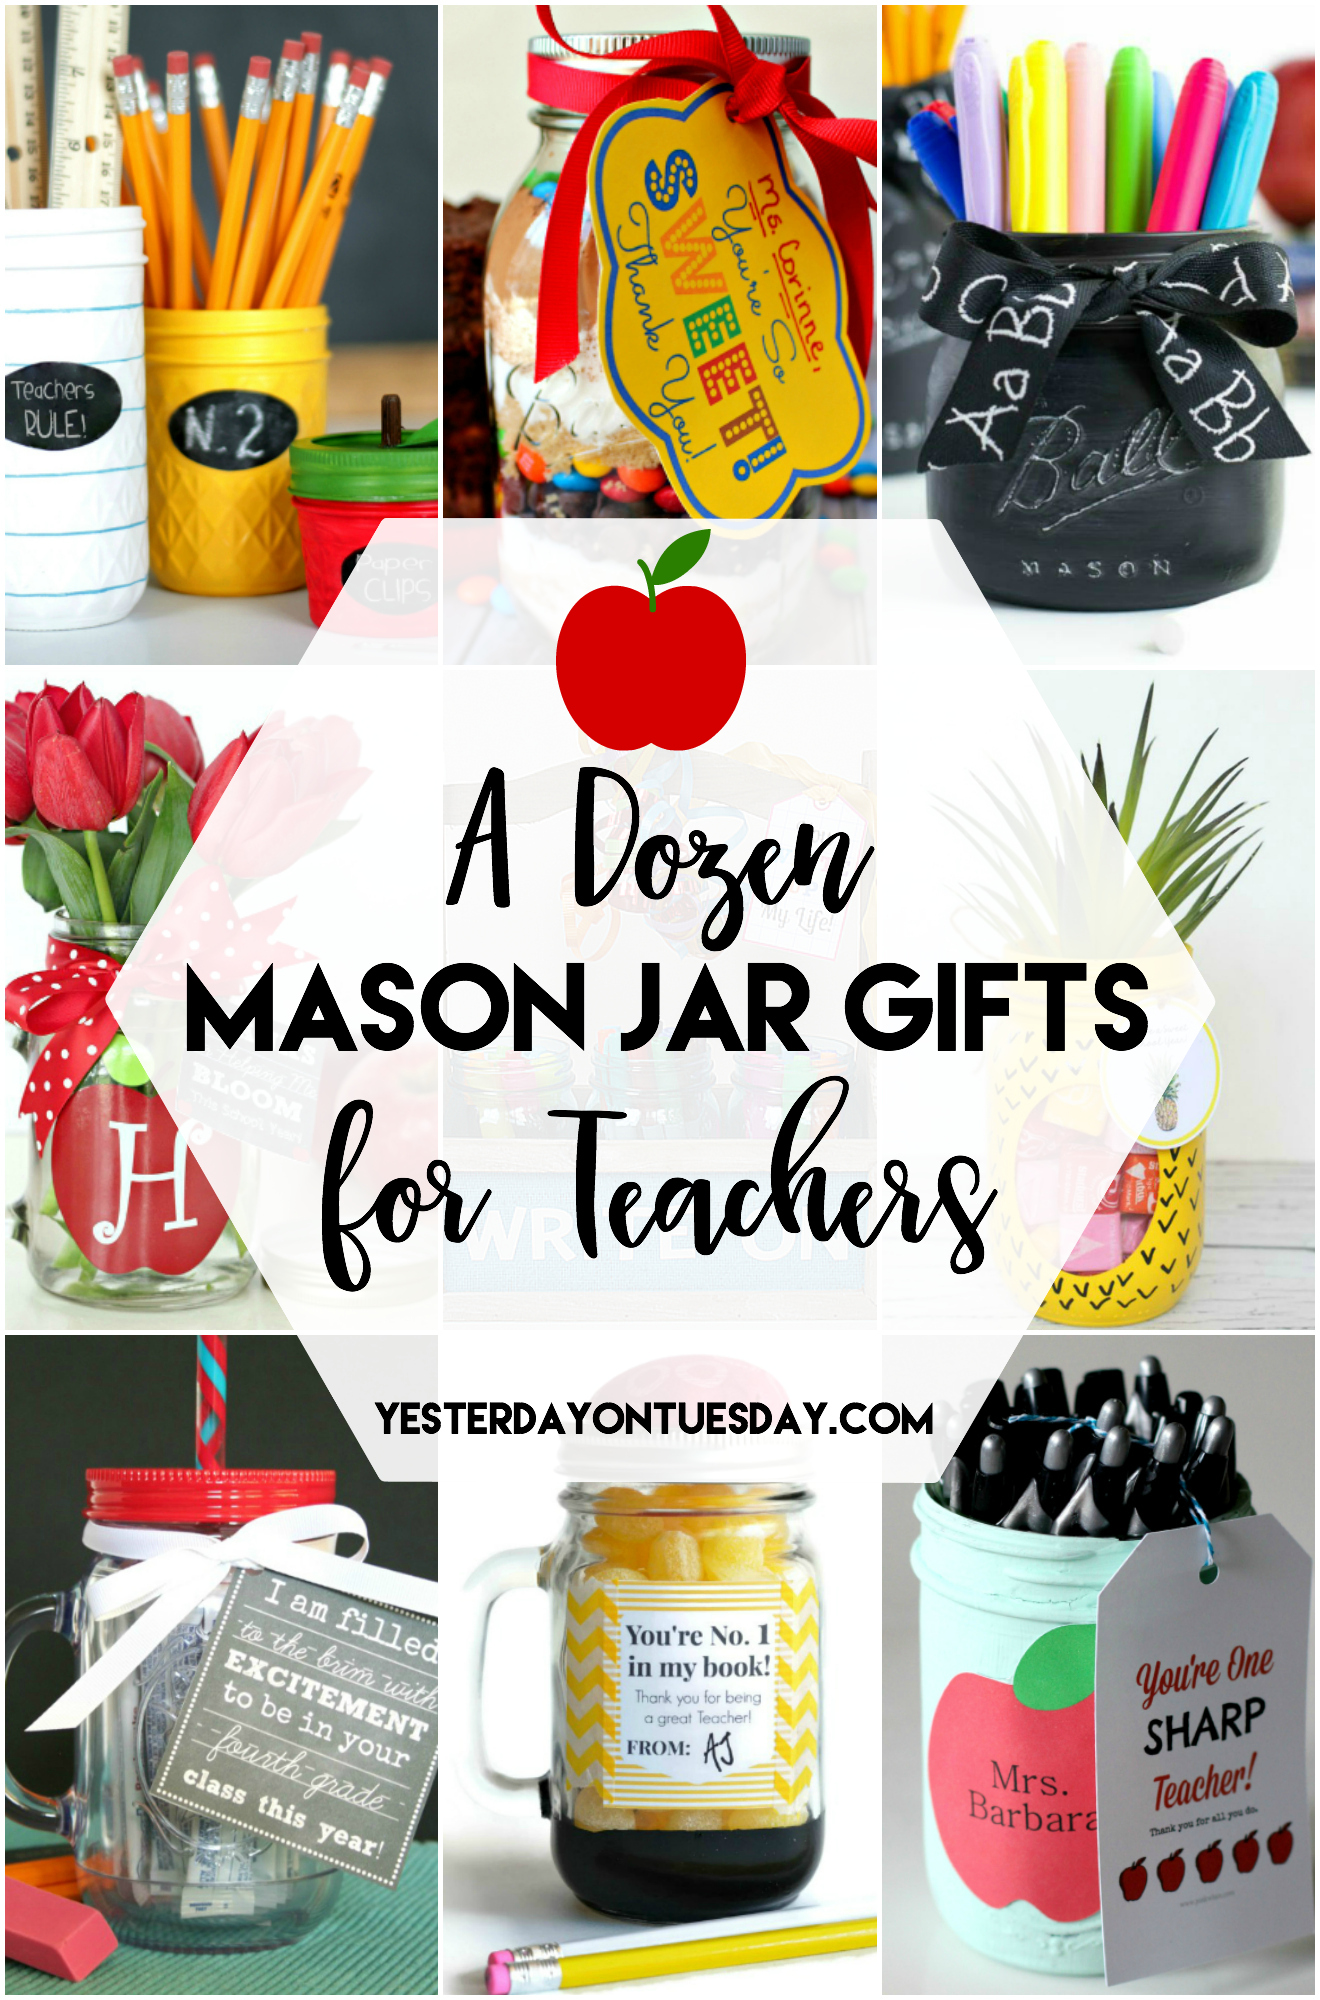 a-dozen-mason-jar-gifts-for-teachers-yesterday-on-tuesday